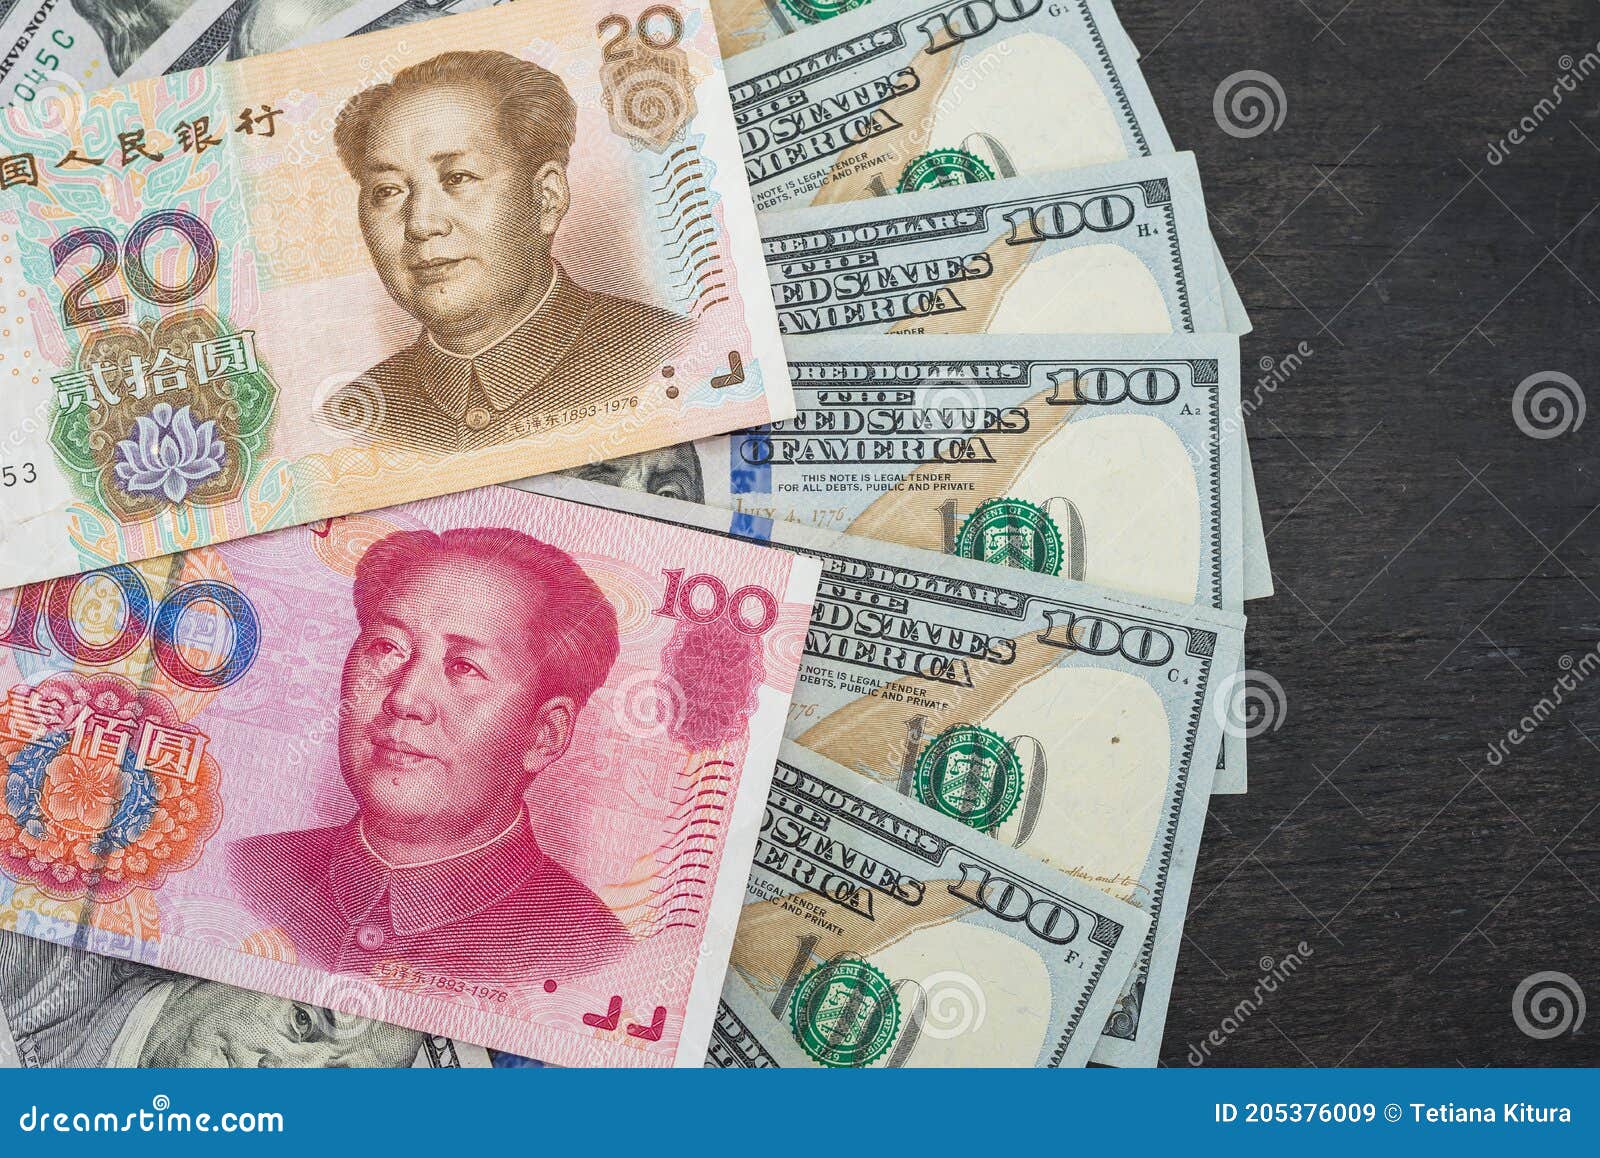 4 yuan to usd